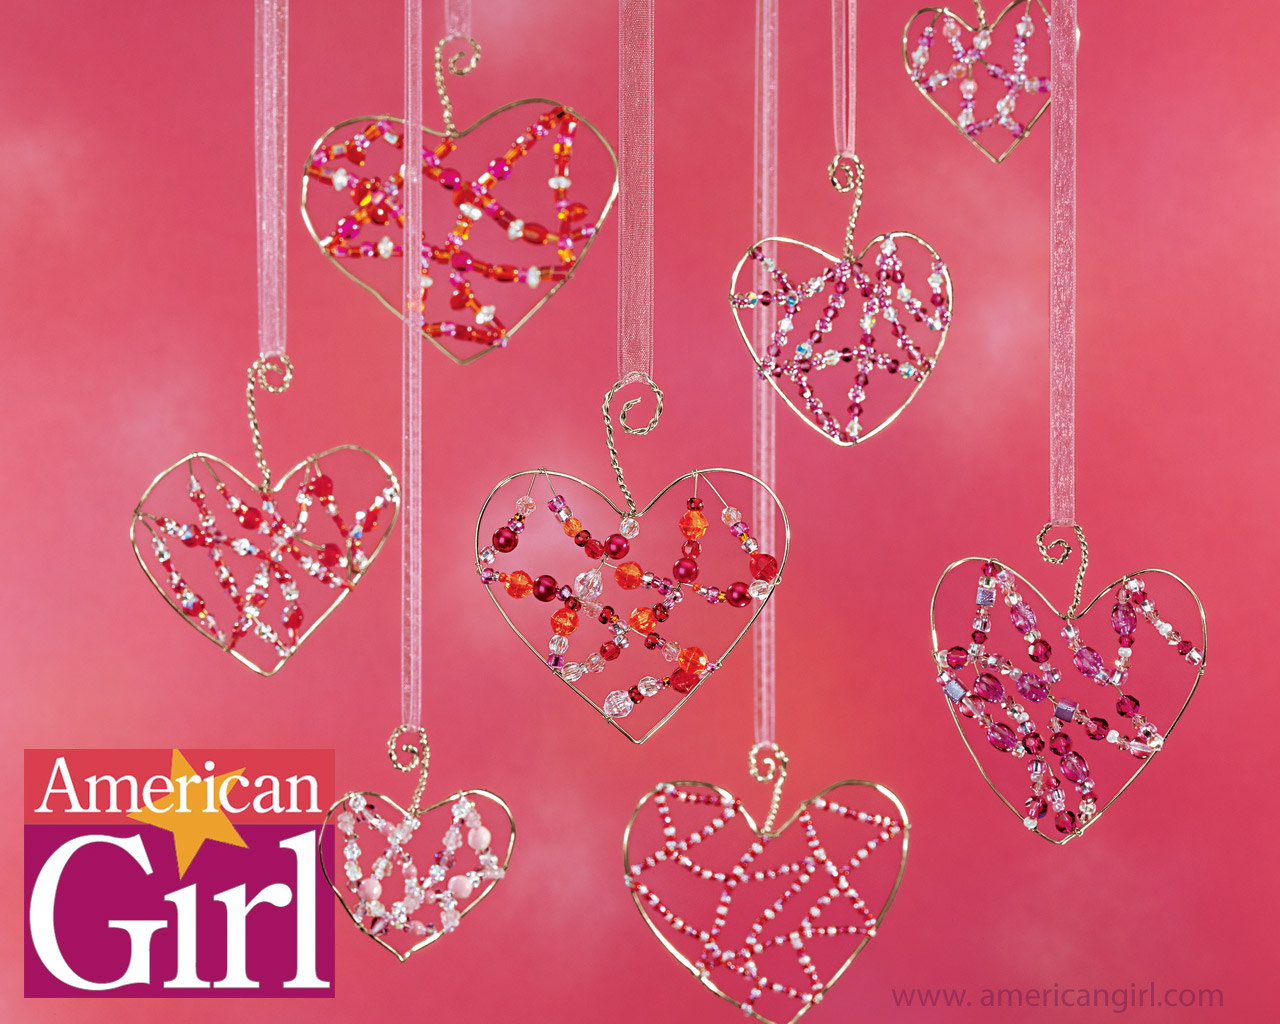 American Girl Magazine Feature